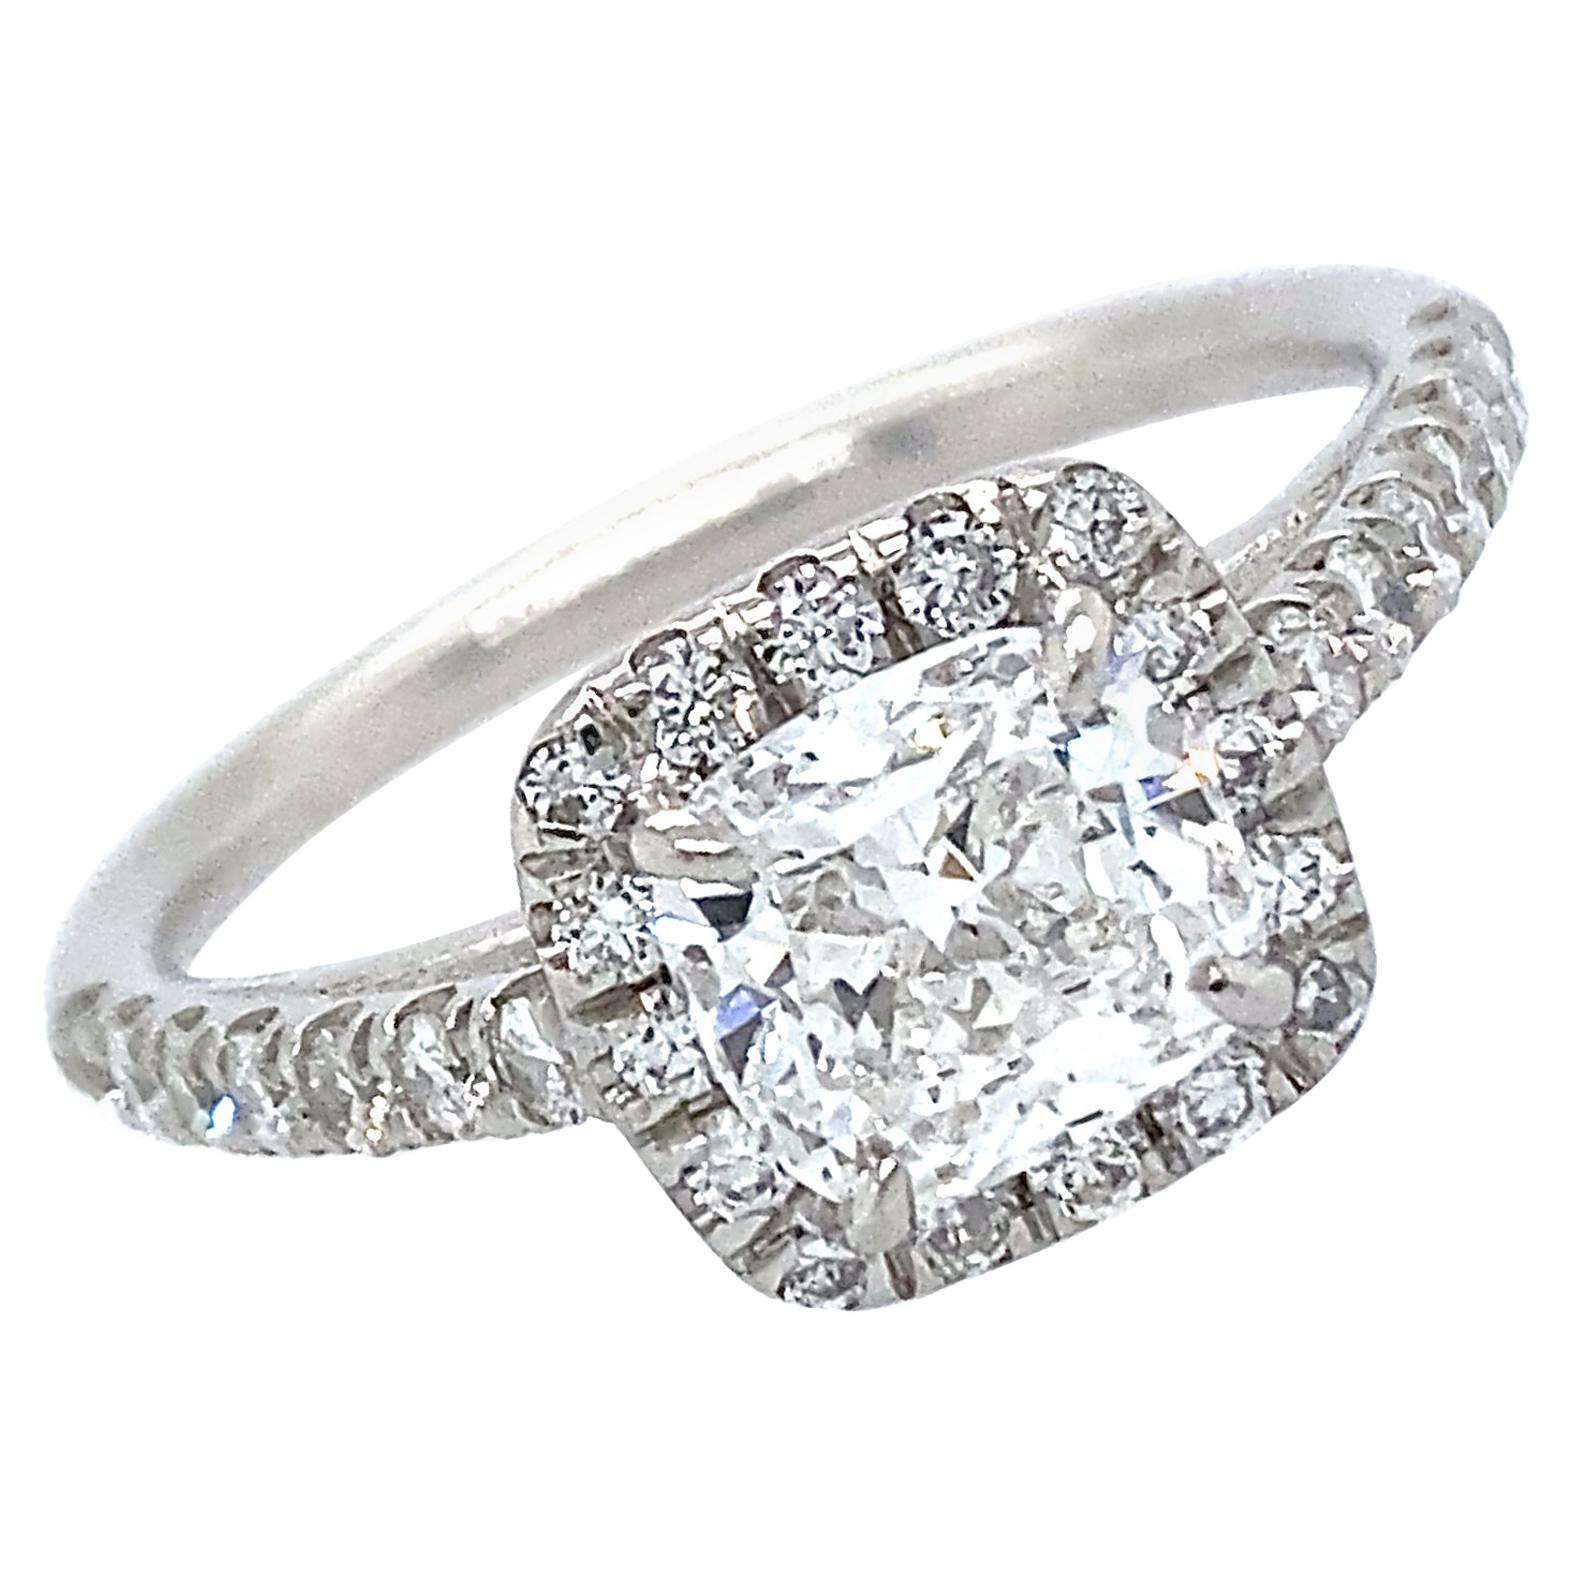 Certified 1.01 Carat Cushion Brilliant Diamond in Platinum Halo Engagement Ring